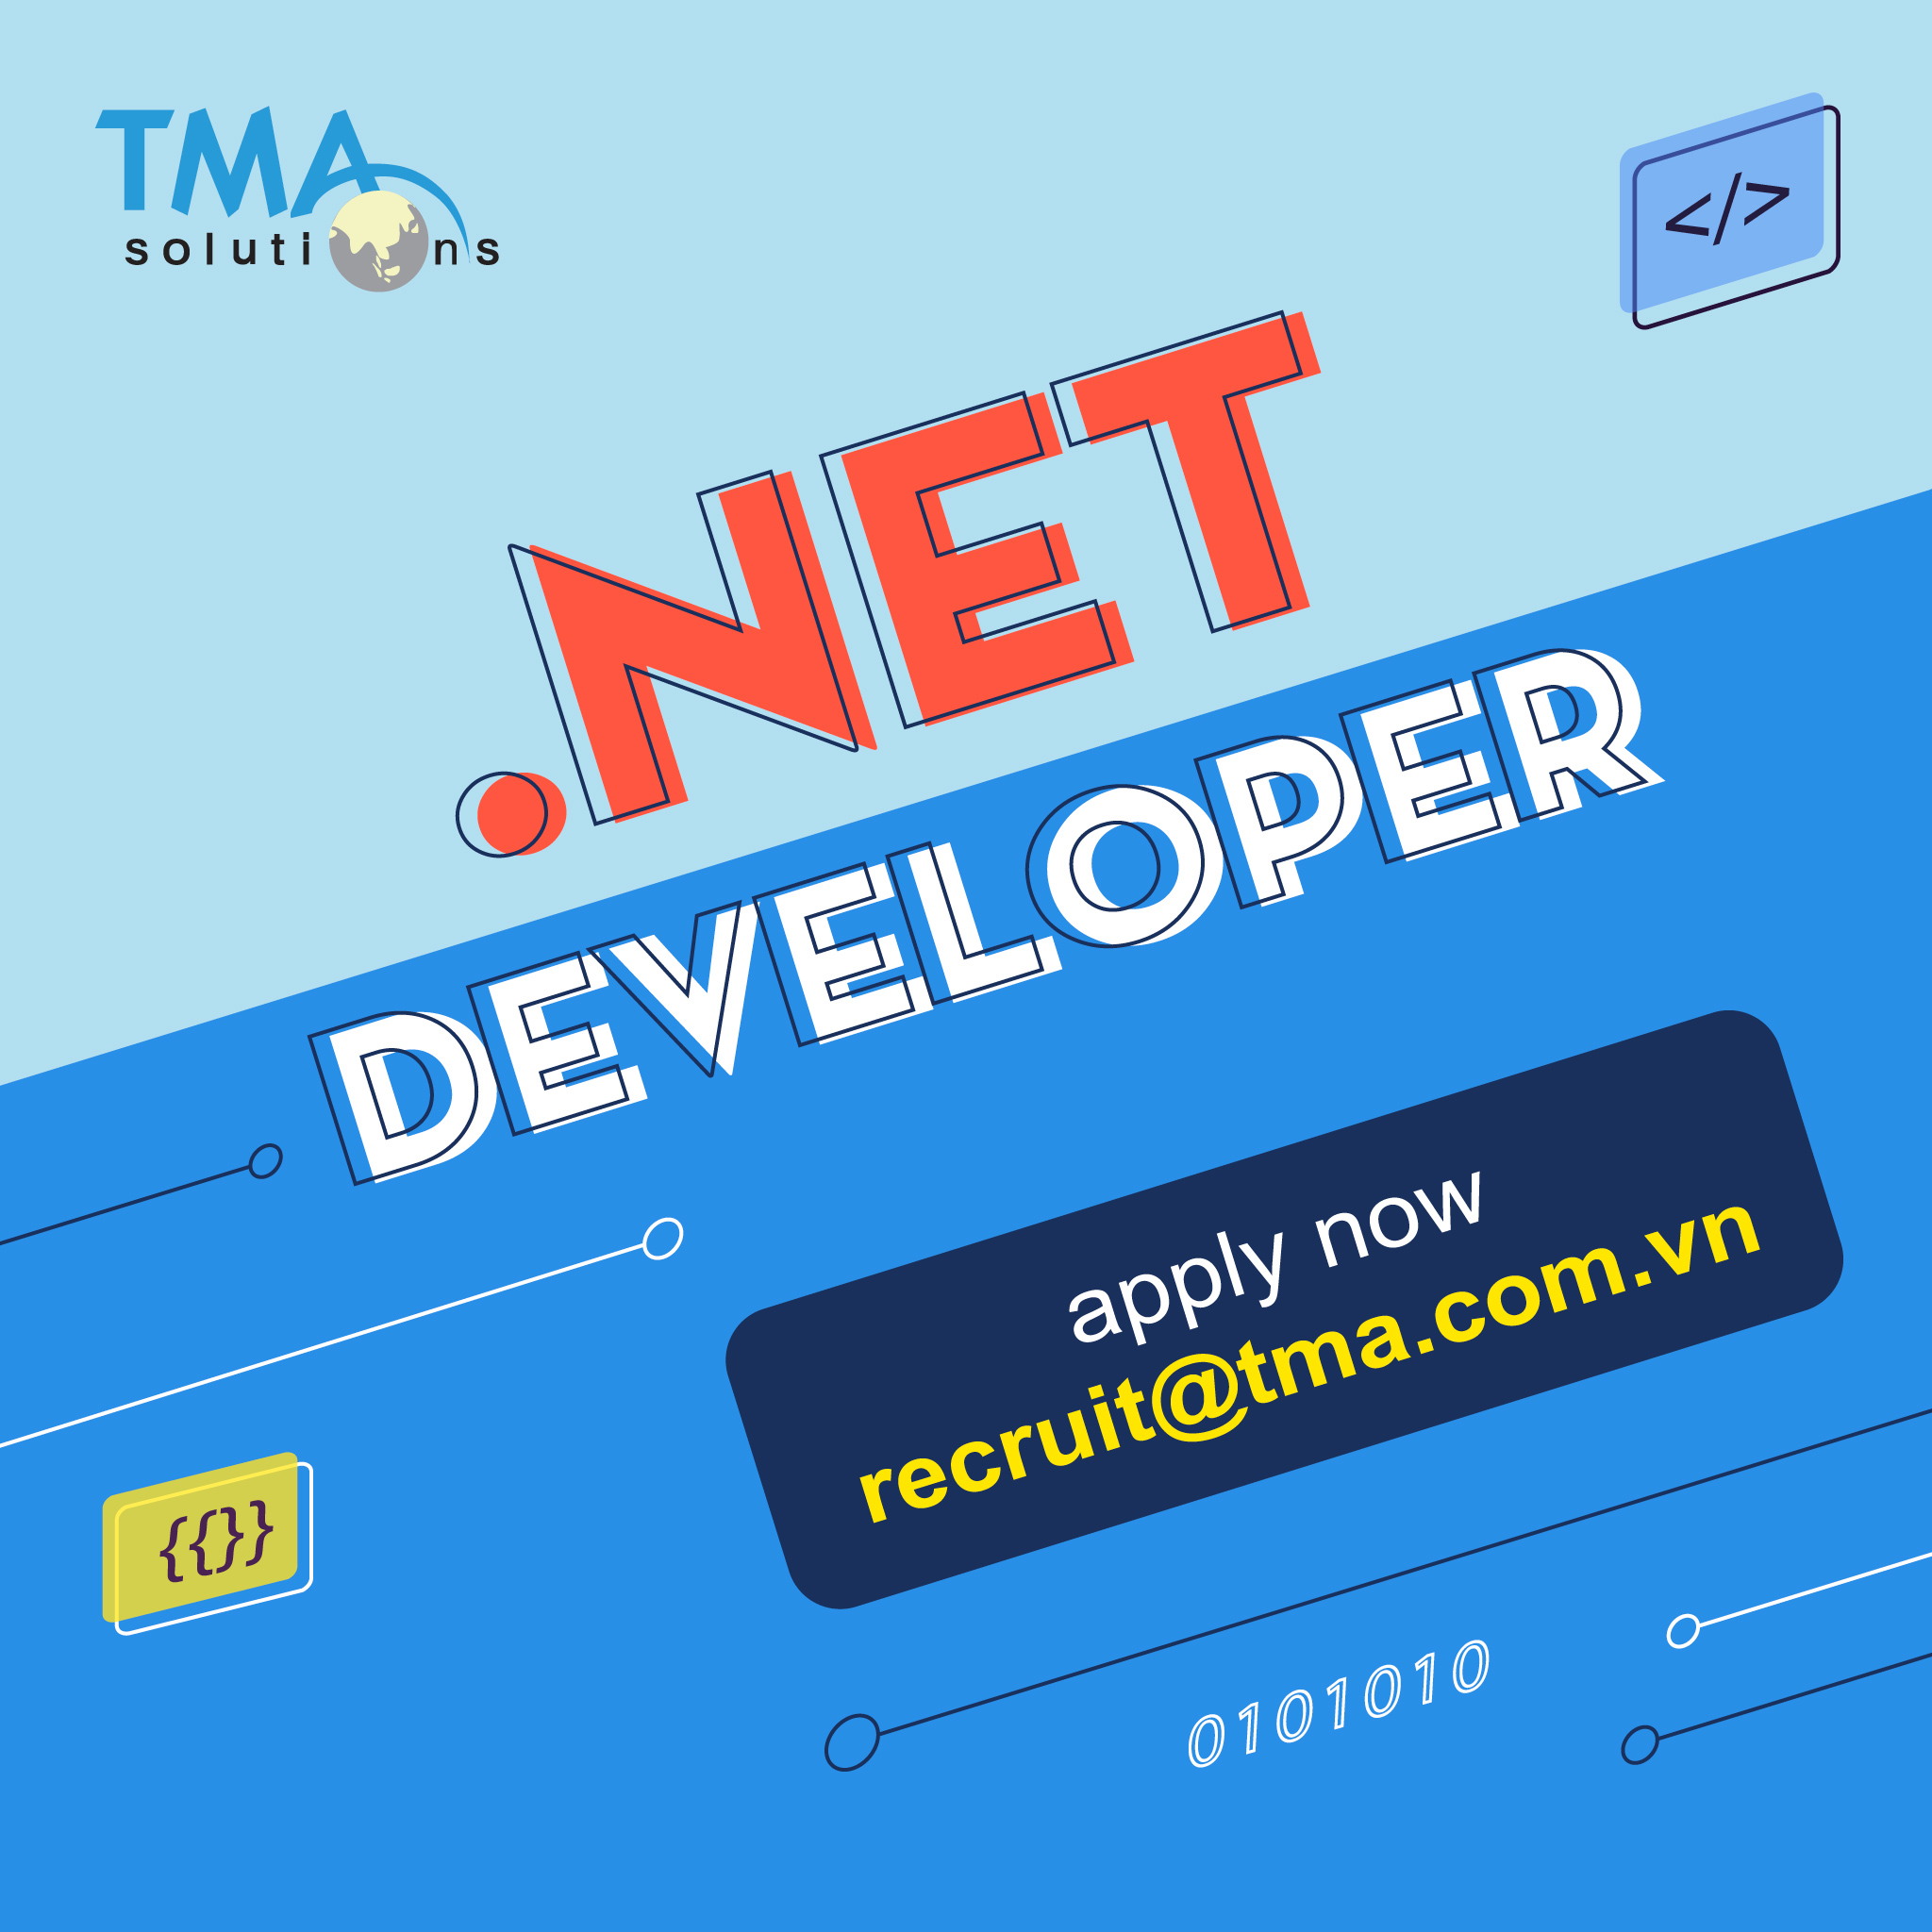 TMA is now hiring .Net Developer